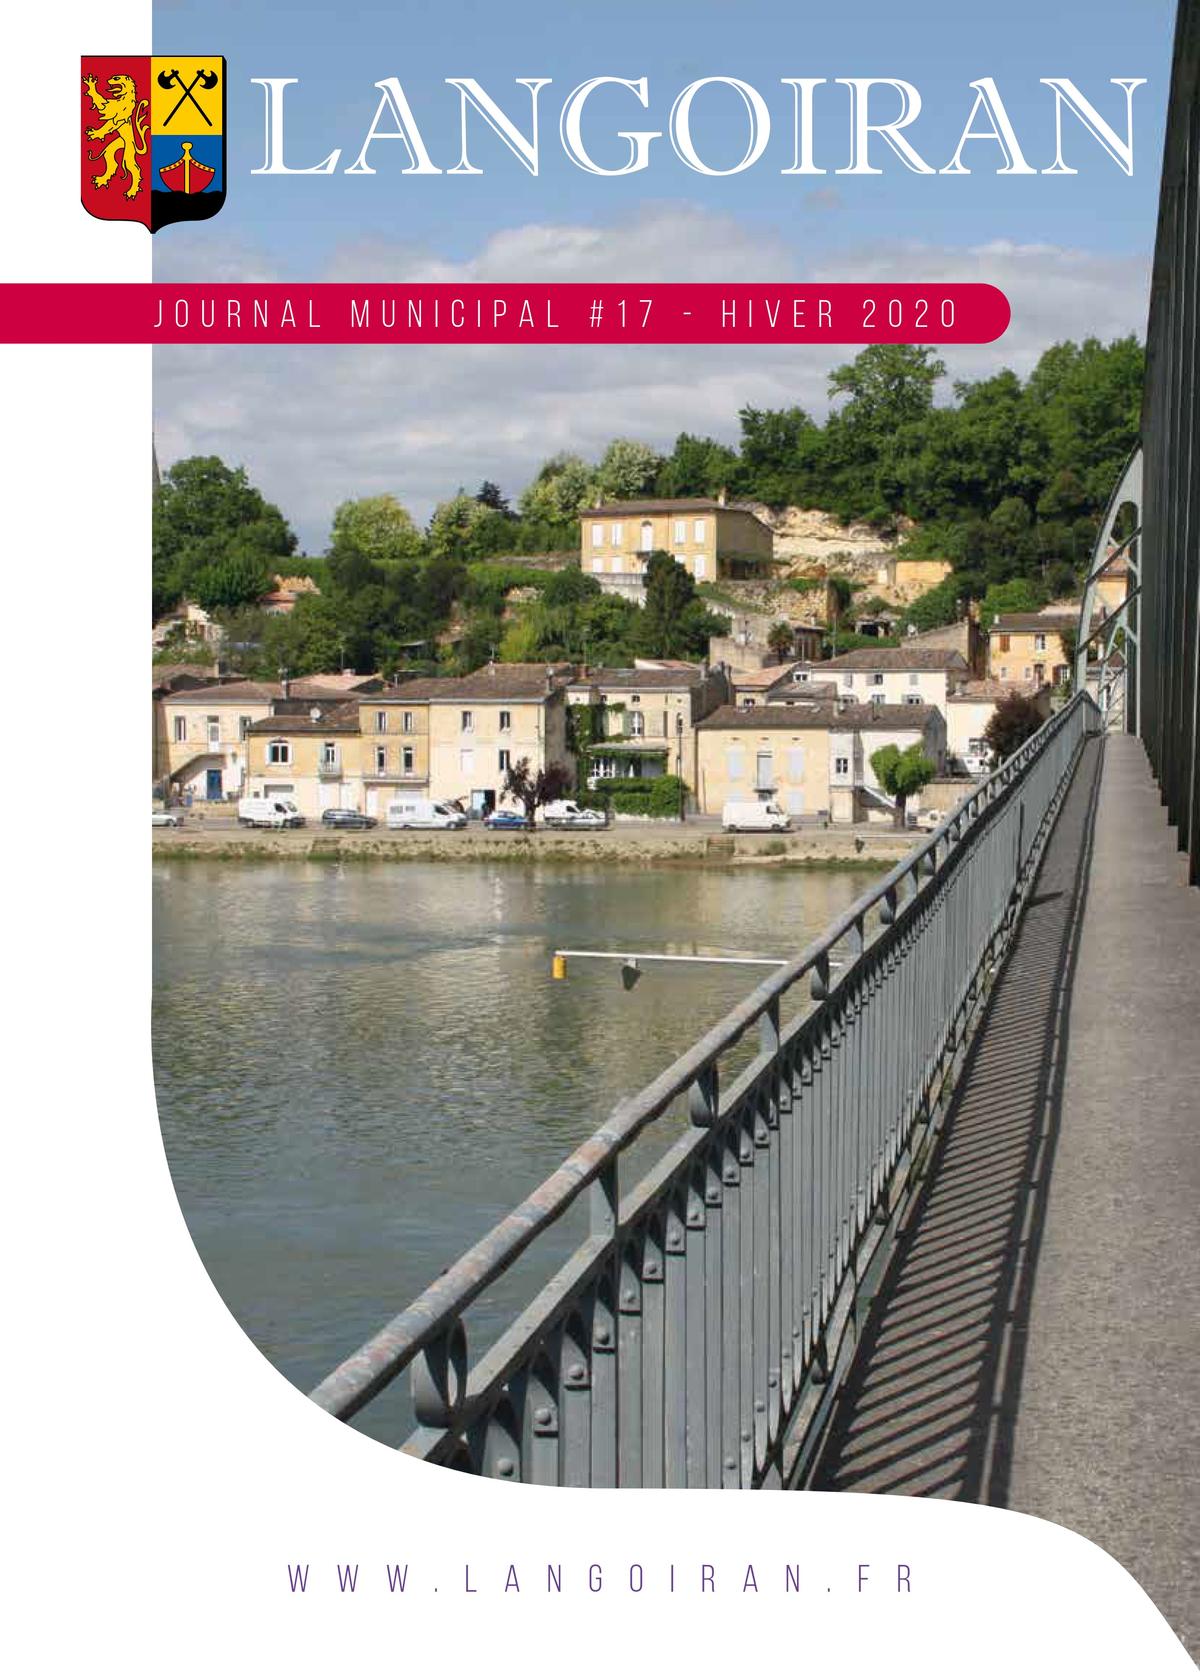 Journal municipal N° 17 - Hiver 2020